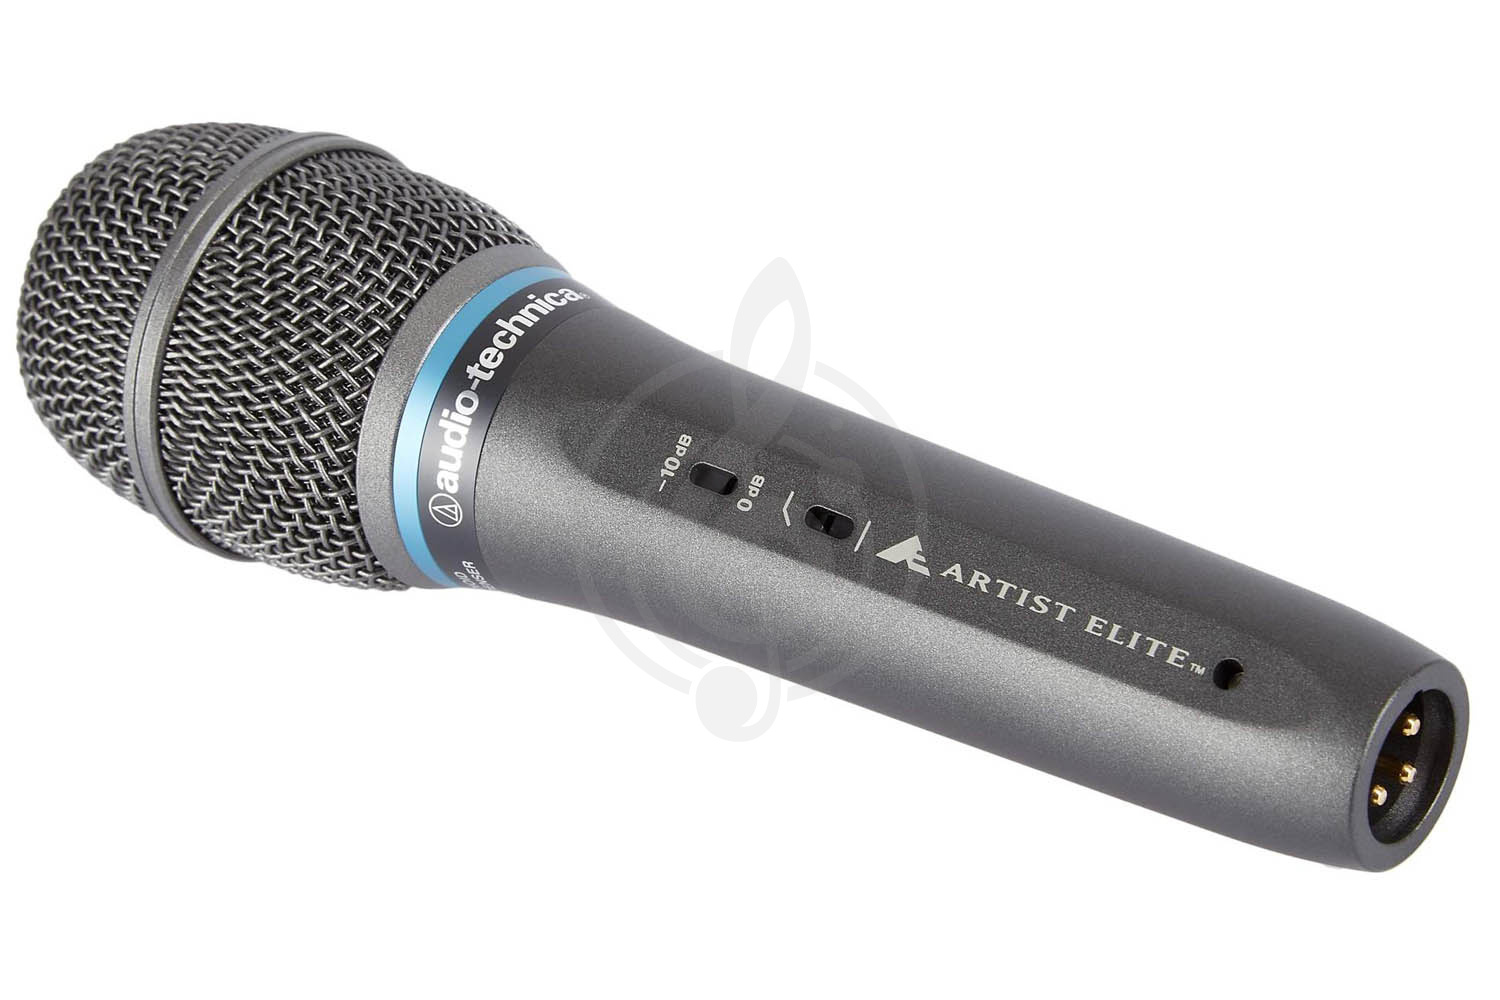 Конденсаторный вокальный микрофон Конденсаторные вокальные микрофоны AUDIO-TECHNICA Audio-technica AE3300 - вокальный электретный конденсаторный микрофон AE3300 - фото 1